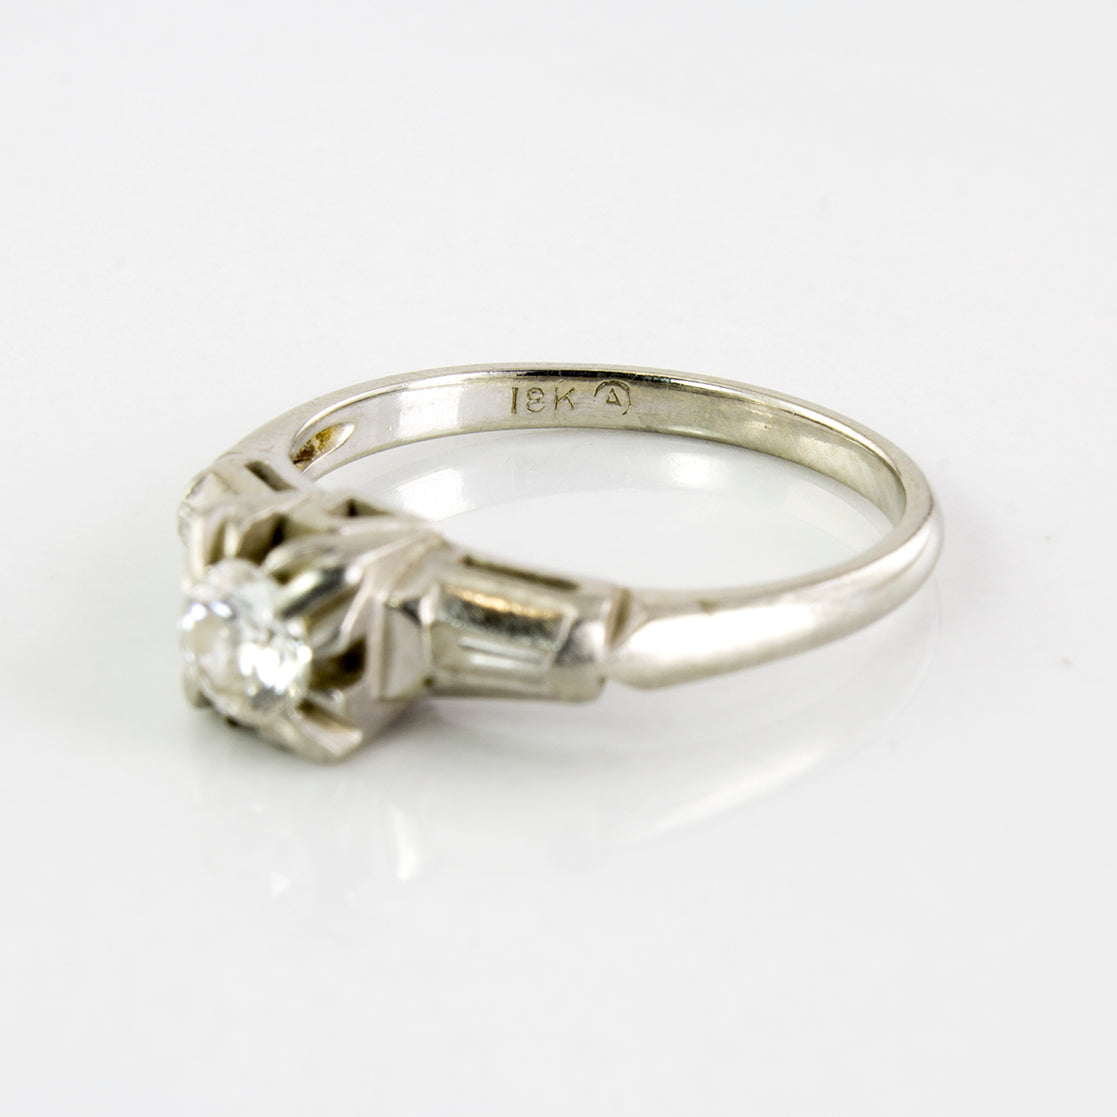 1930's Old European Cut Engagement Ring | 0.35 ctw | SZ 6.5 |